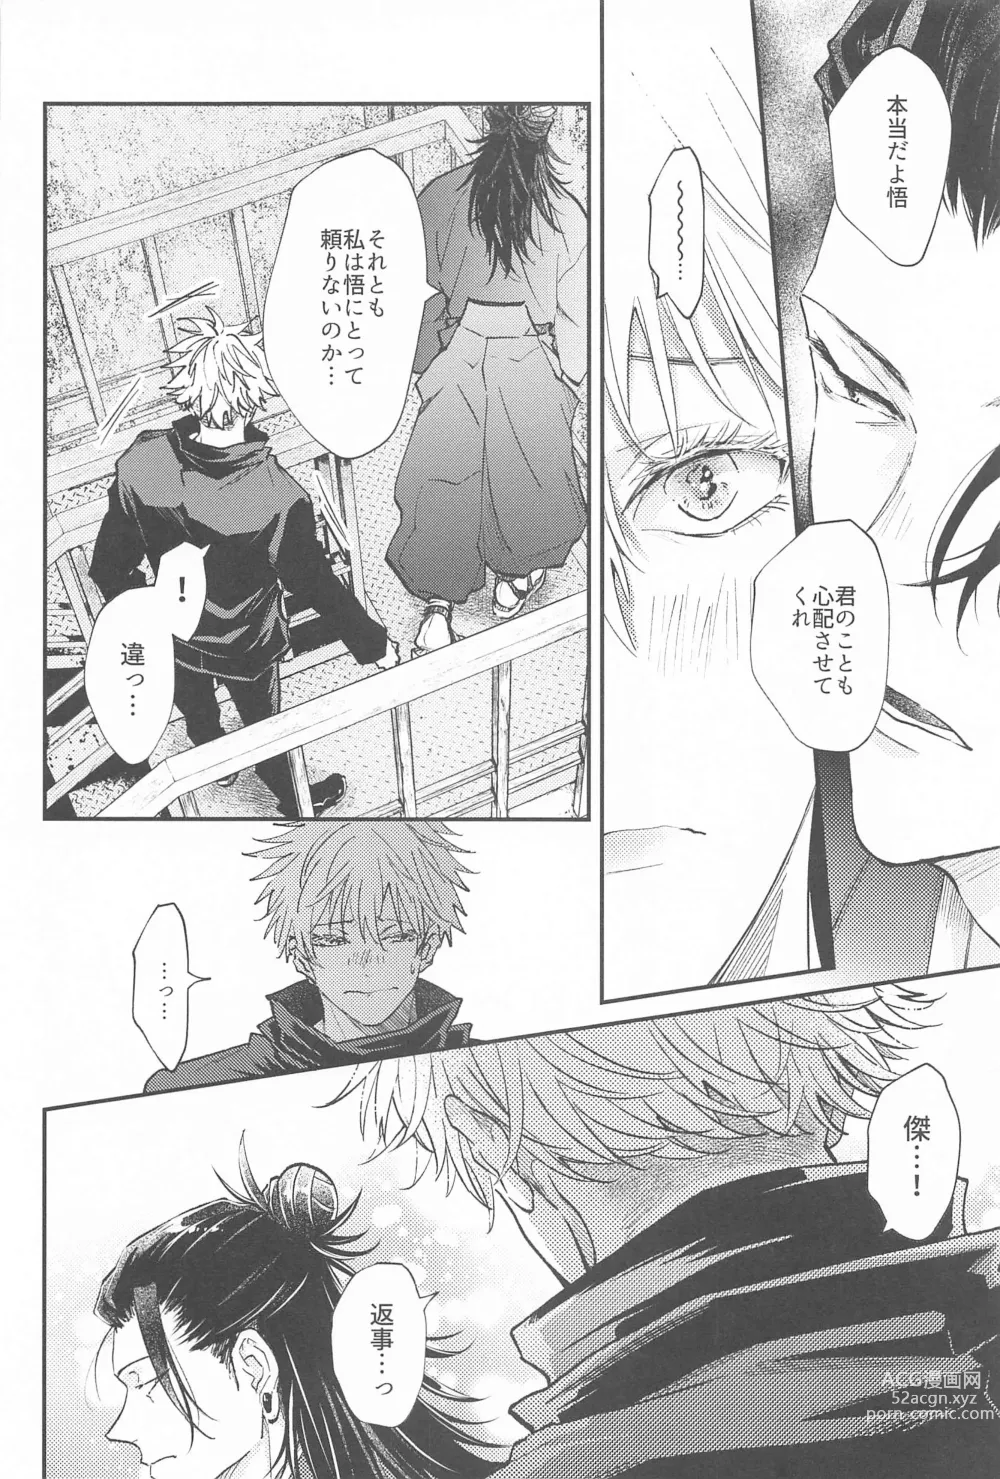 Page 13 of doujinshi Kojirase Blue to Koi Wazurai 2